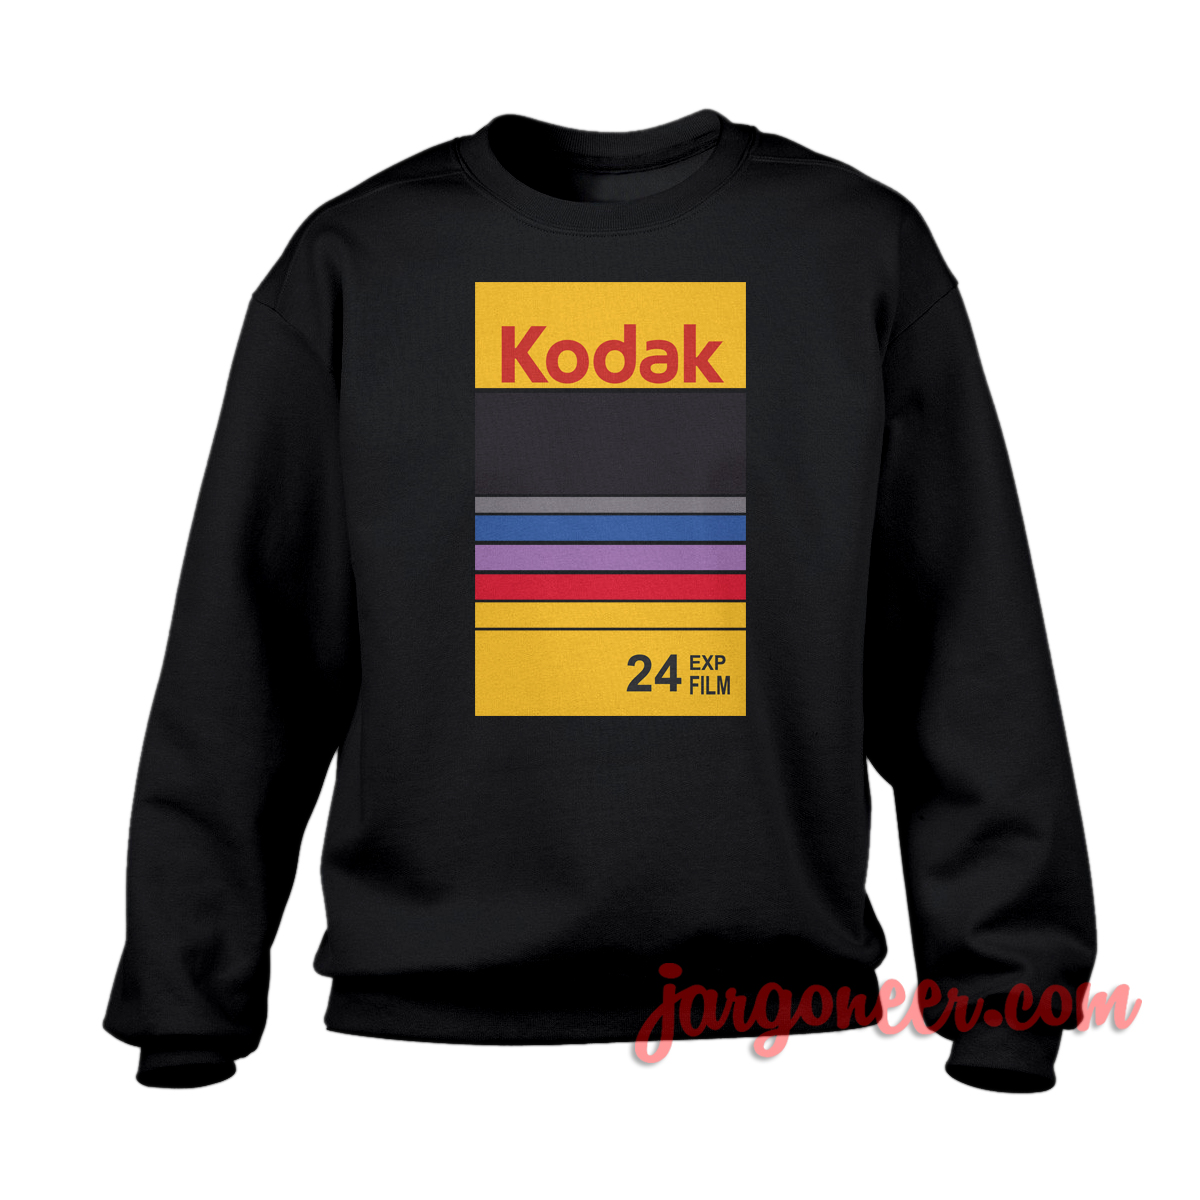 Kodak Closing Ceremony - Shop Unique Graphic Cool Shirt Designs